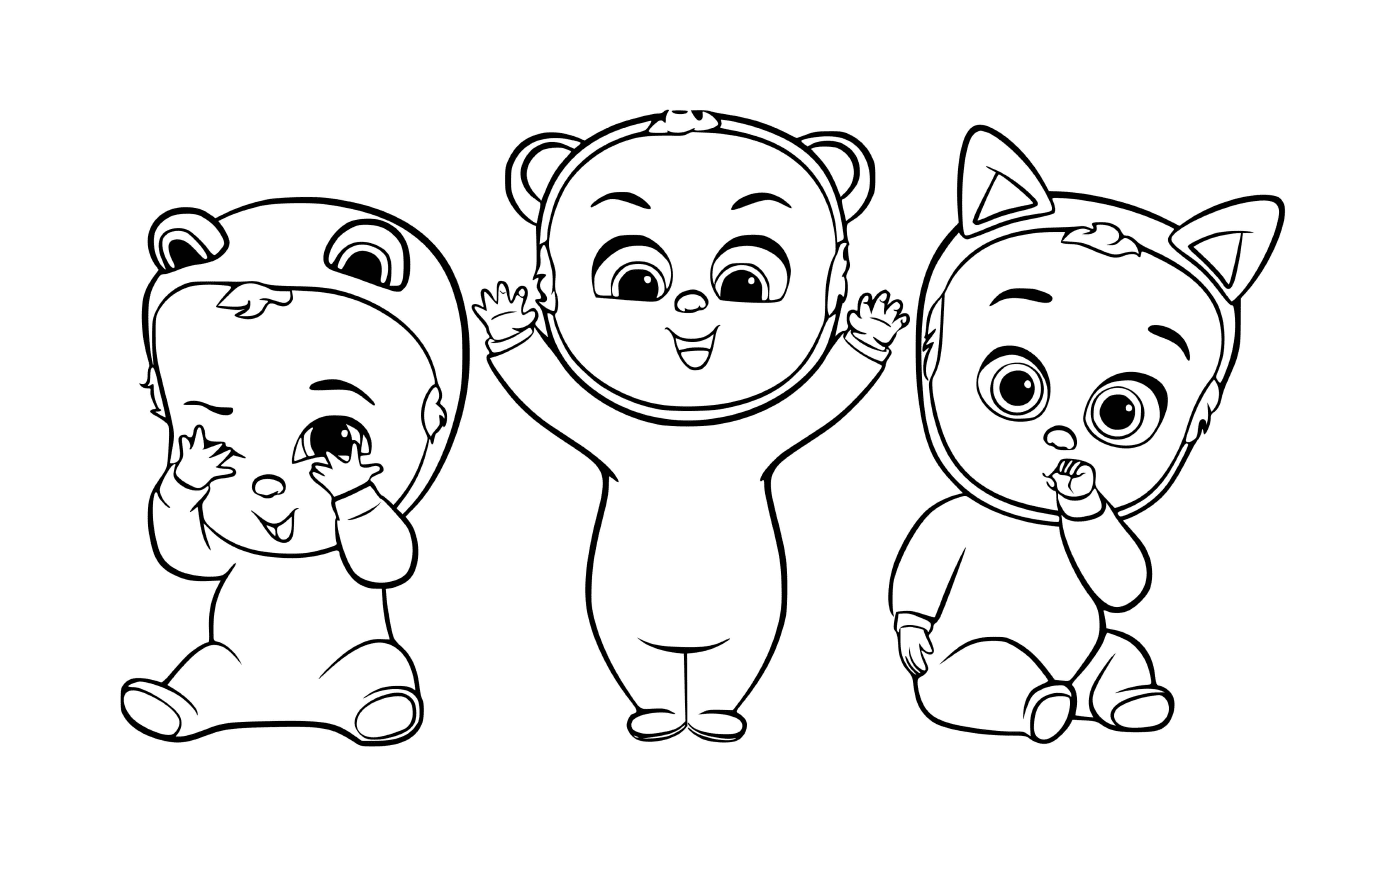  Three baby designs are aligned 